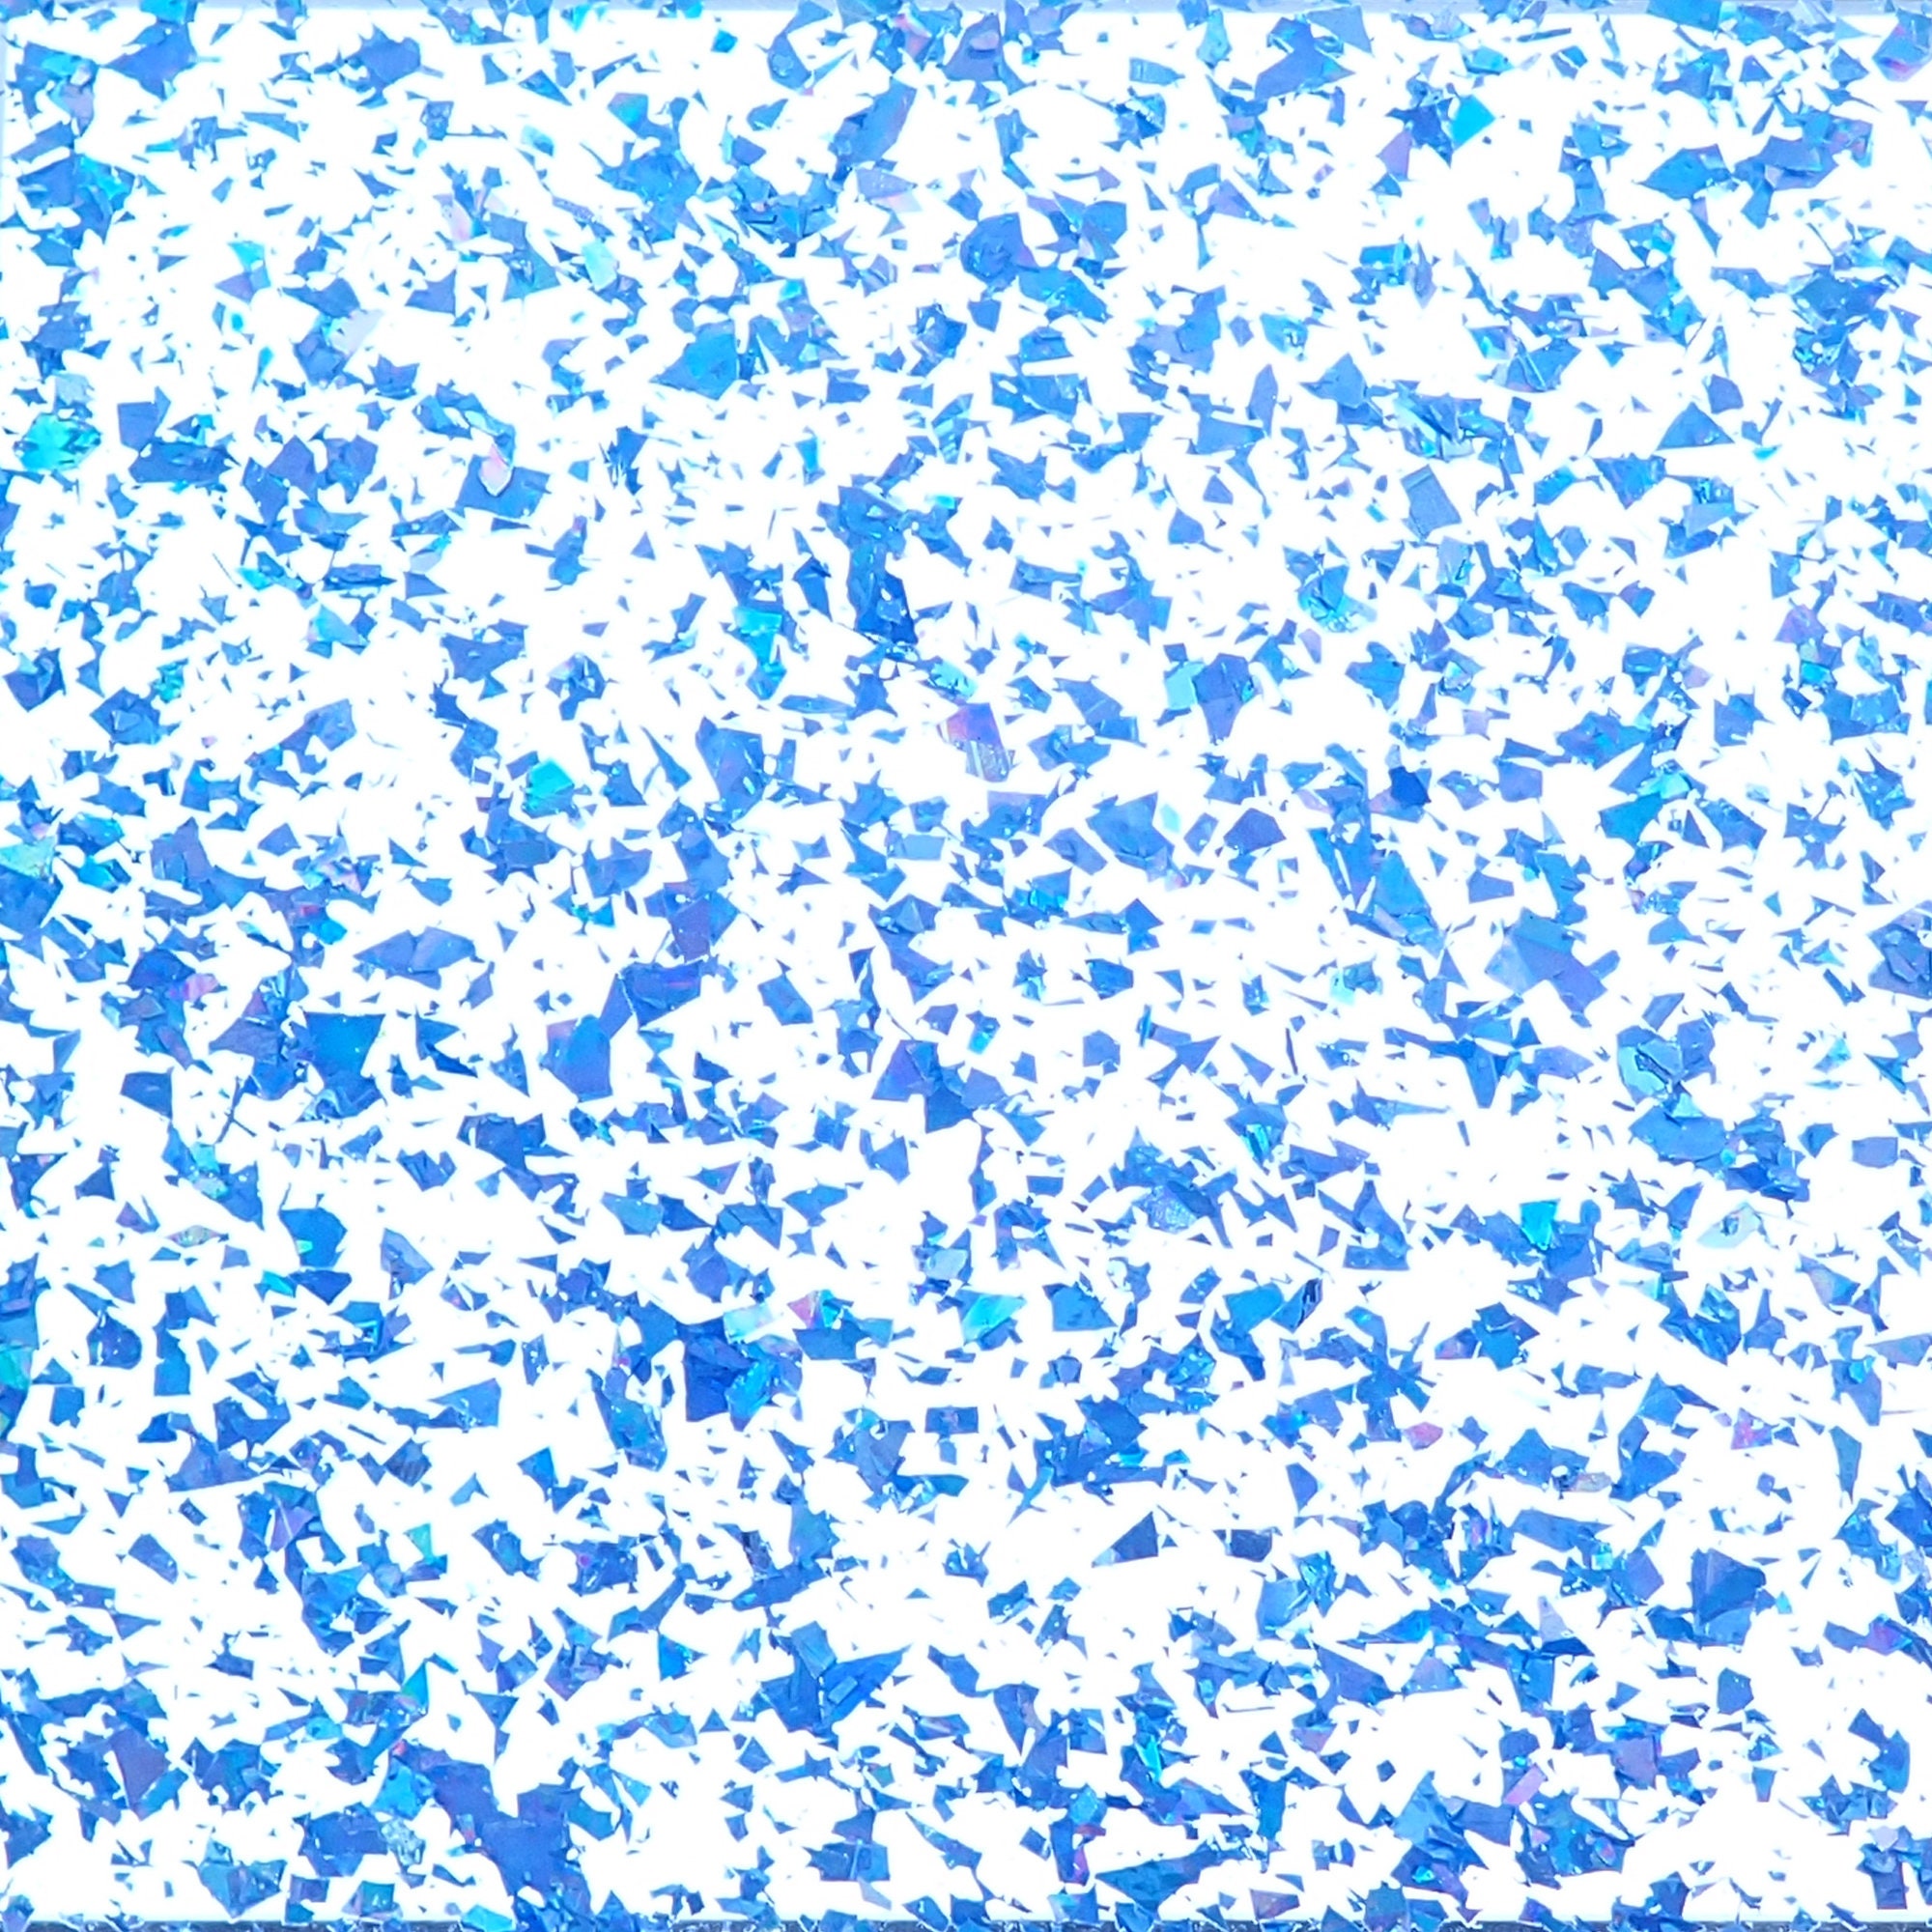 Incudo Blue Transparent Glitter Acrylic Sheet 